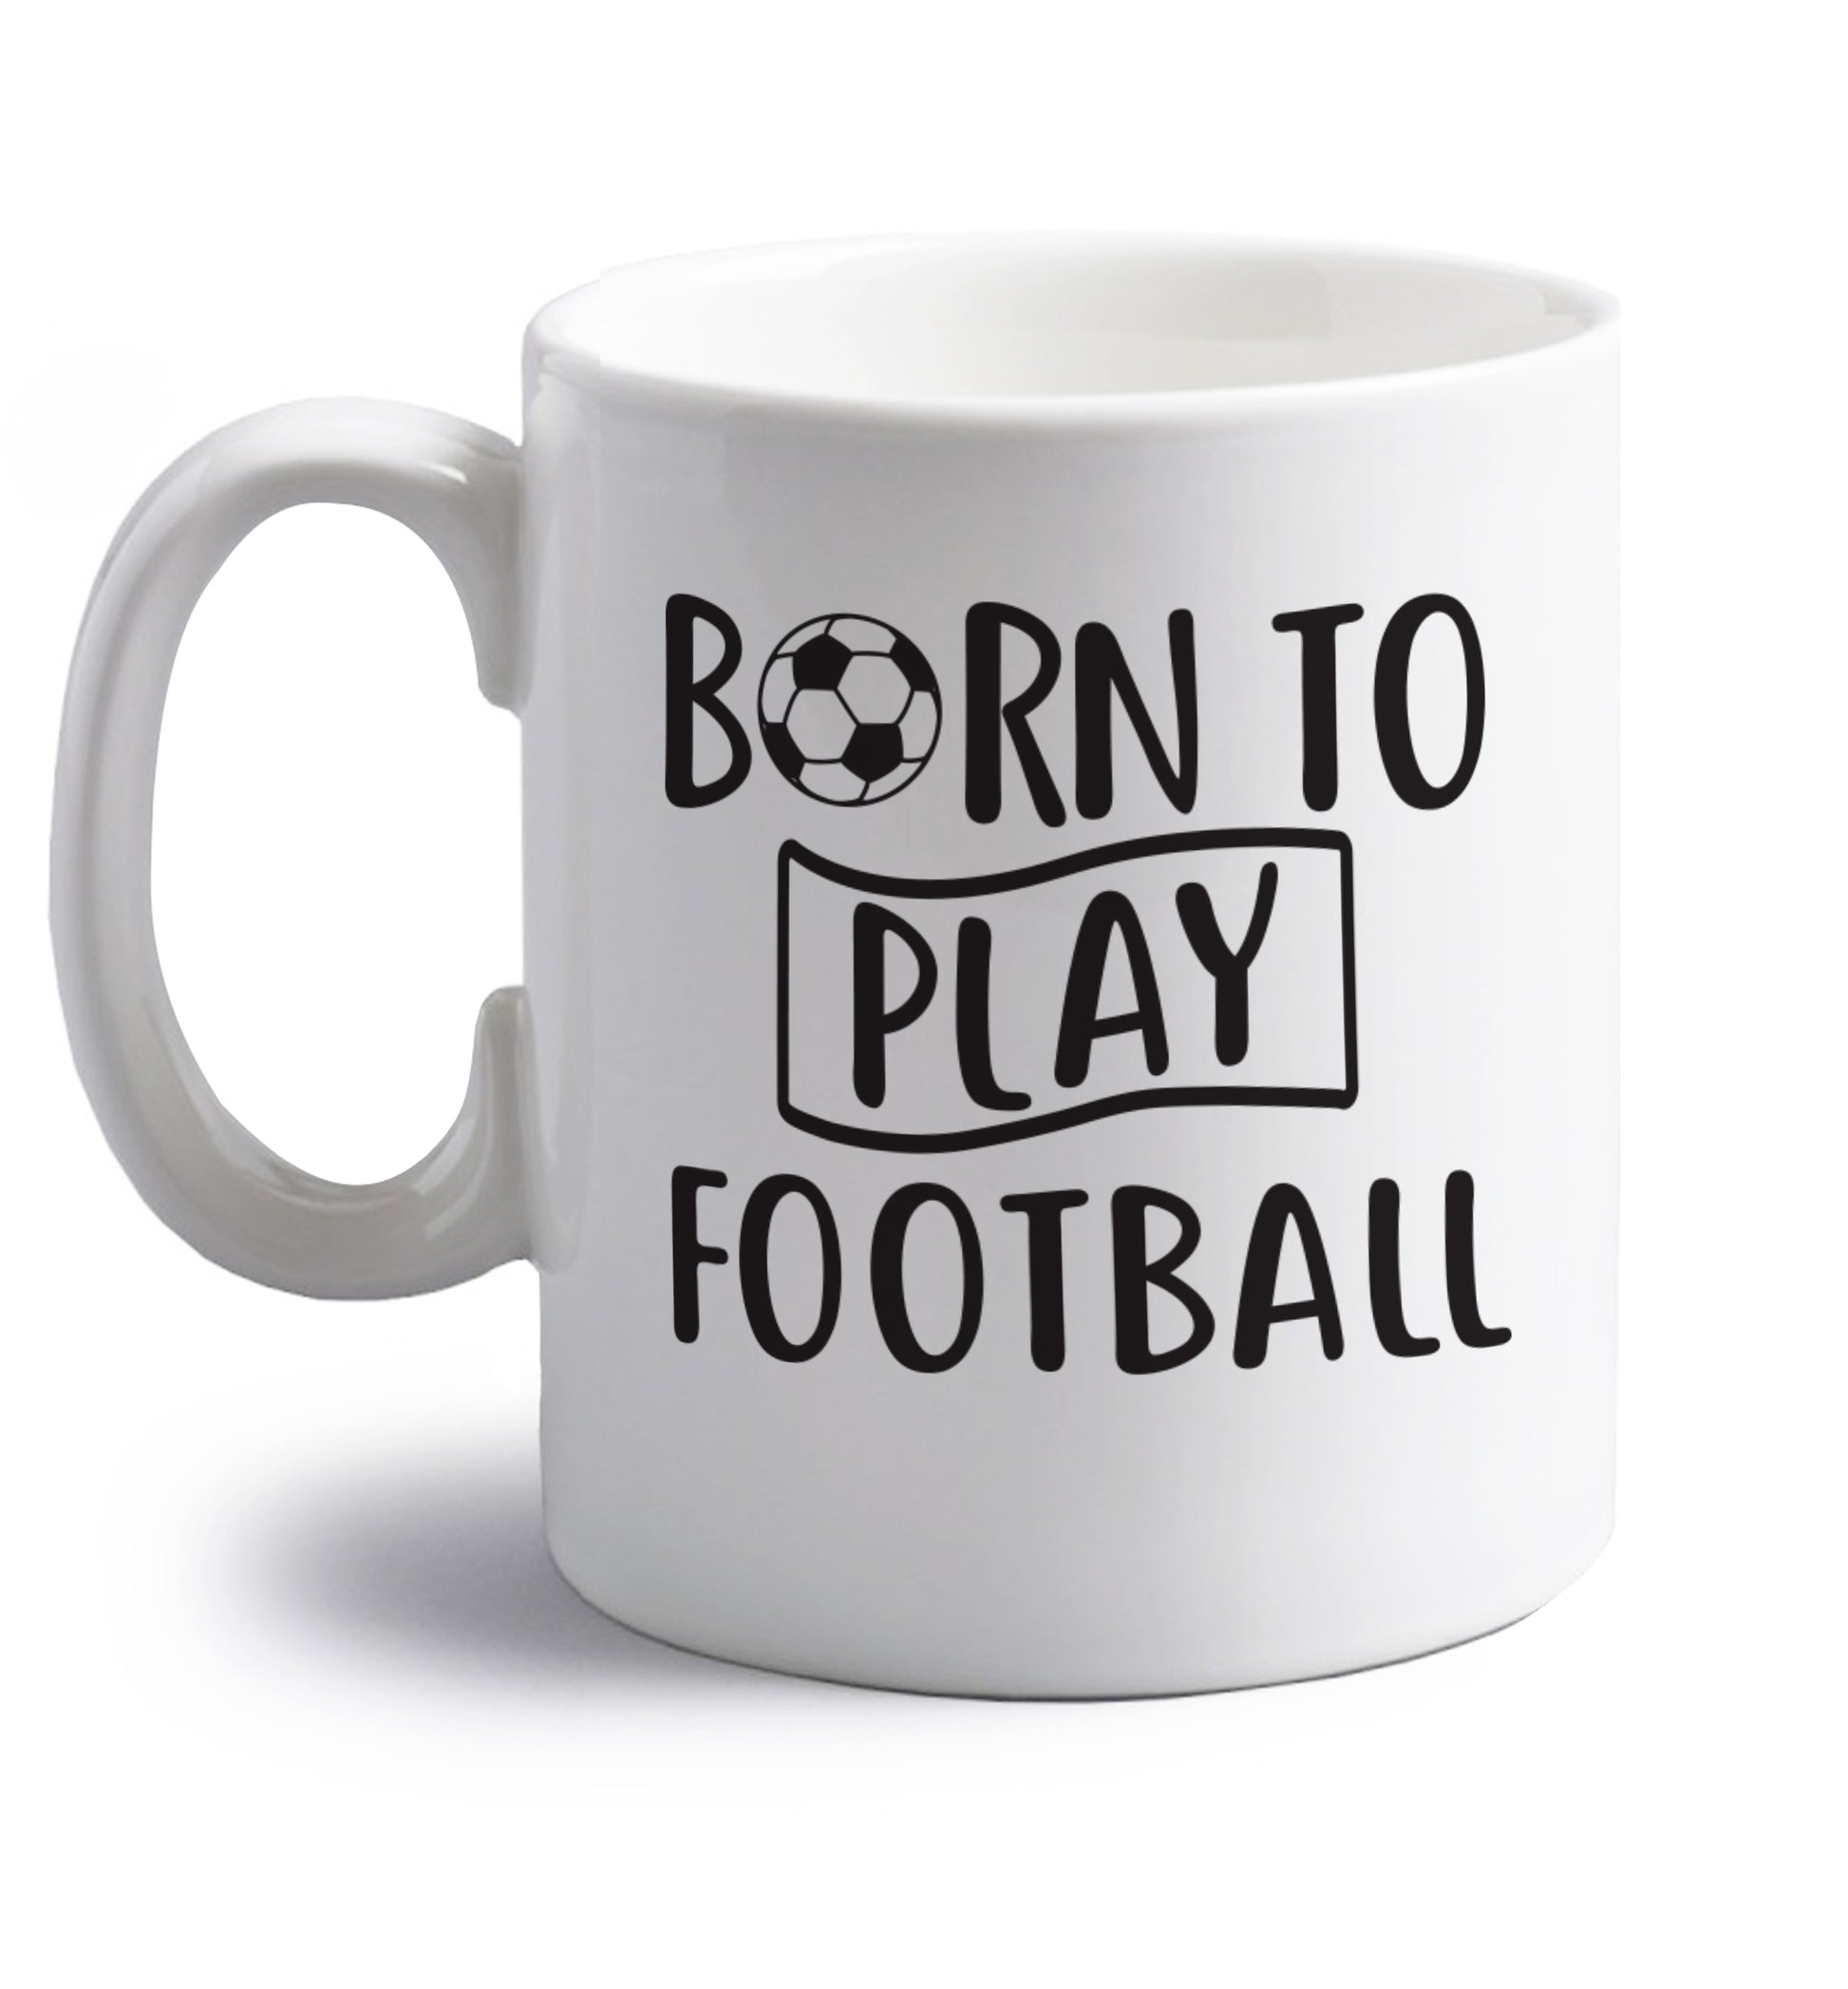 Born to play football right handed white ceramic mug 